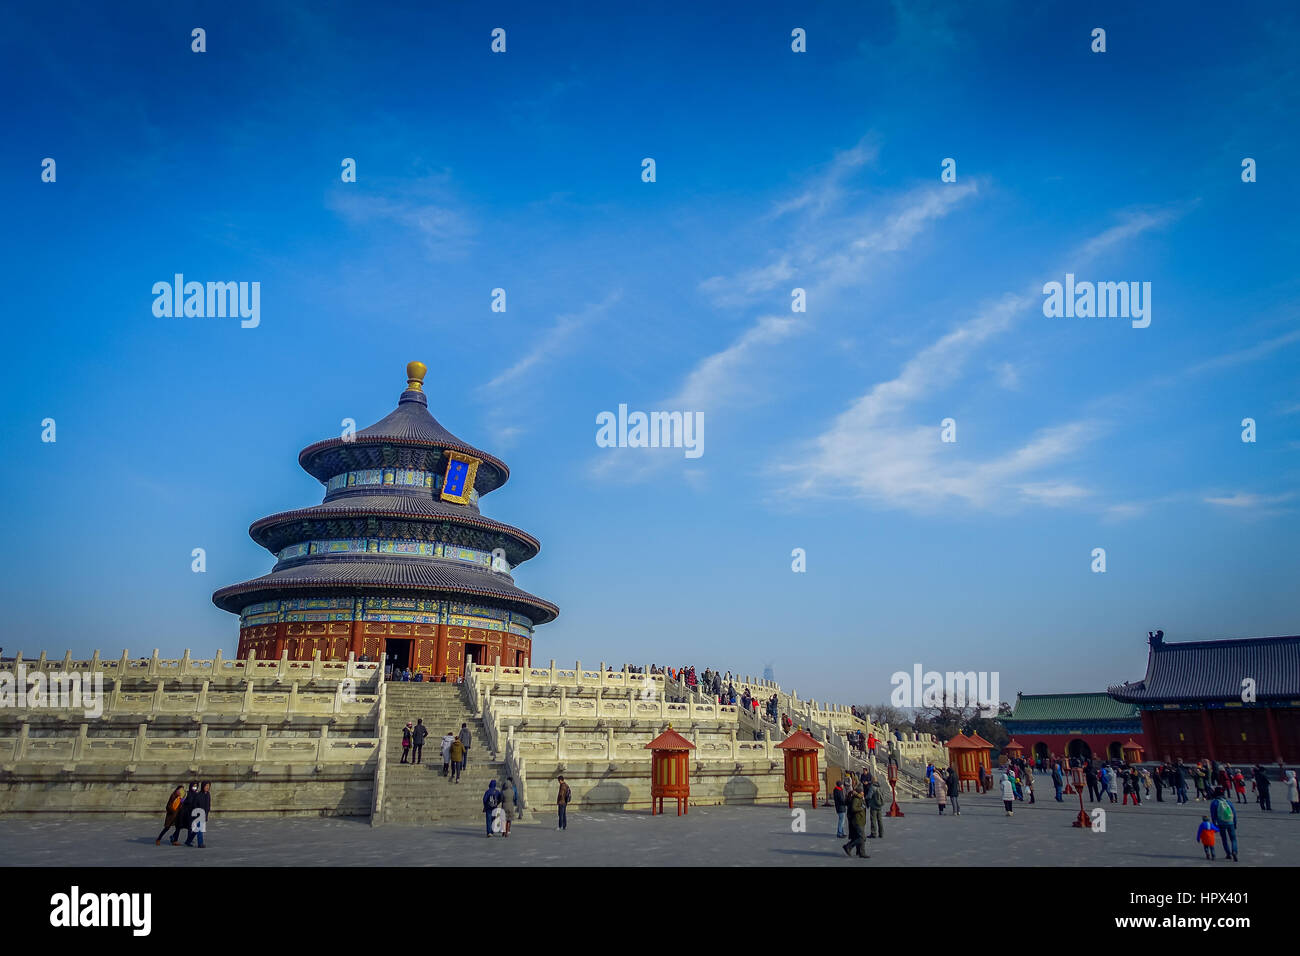 BEIJING, CHINA - 29 JANUARY, 2017: Beautiful circular structure inside ...